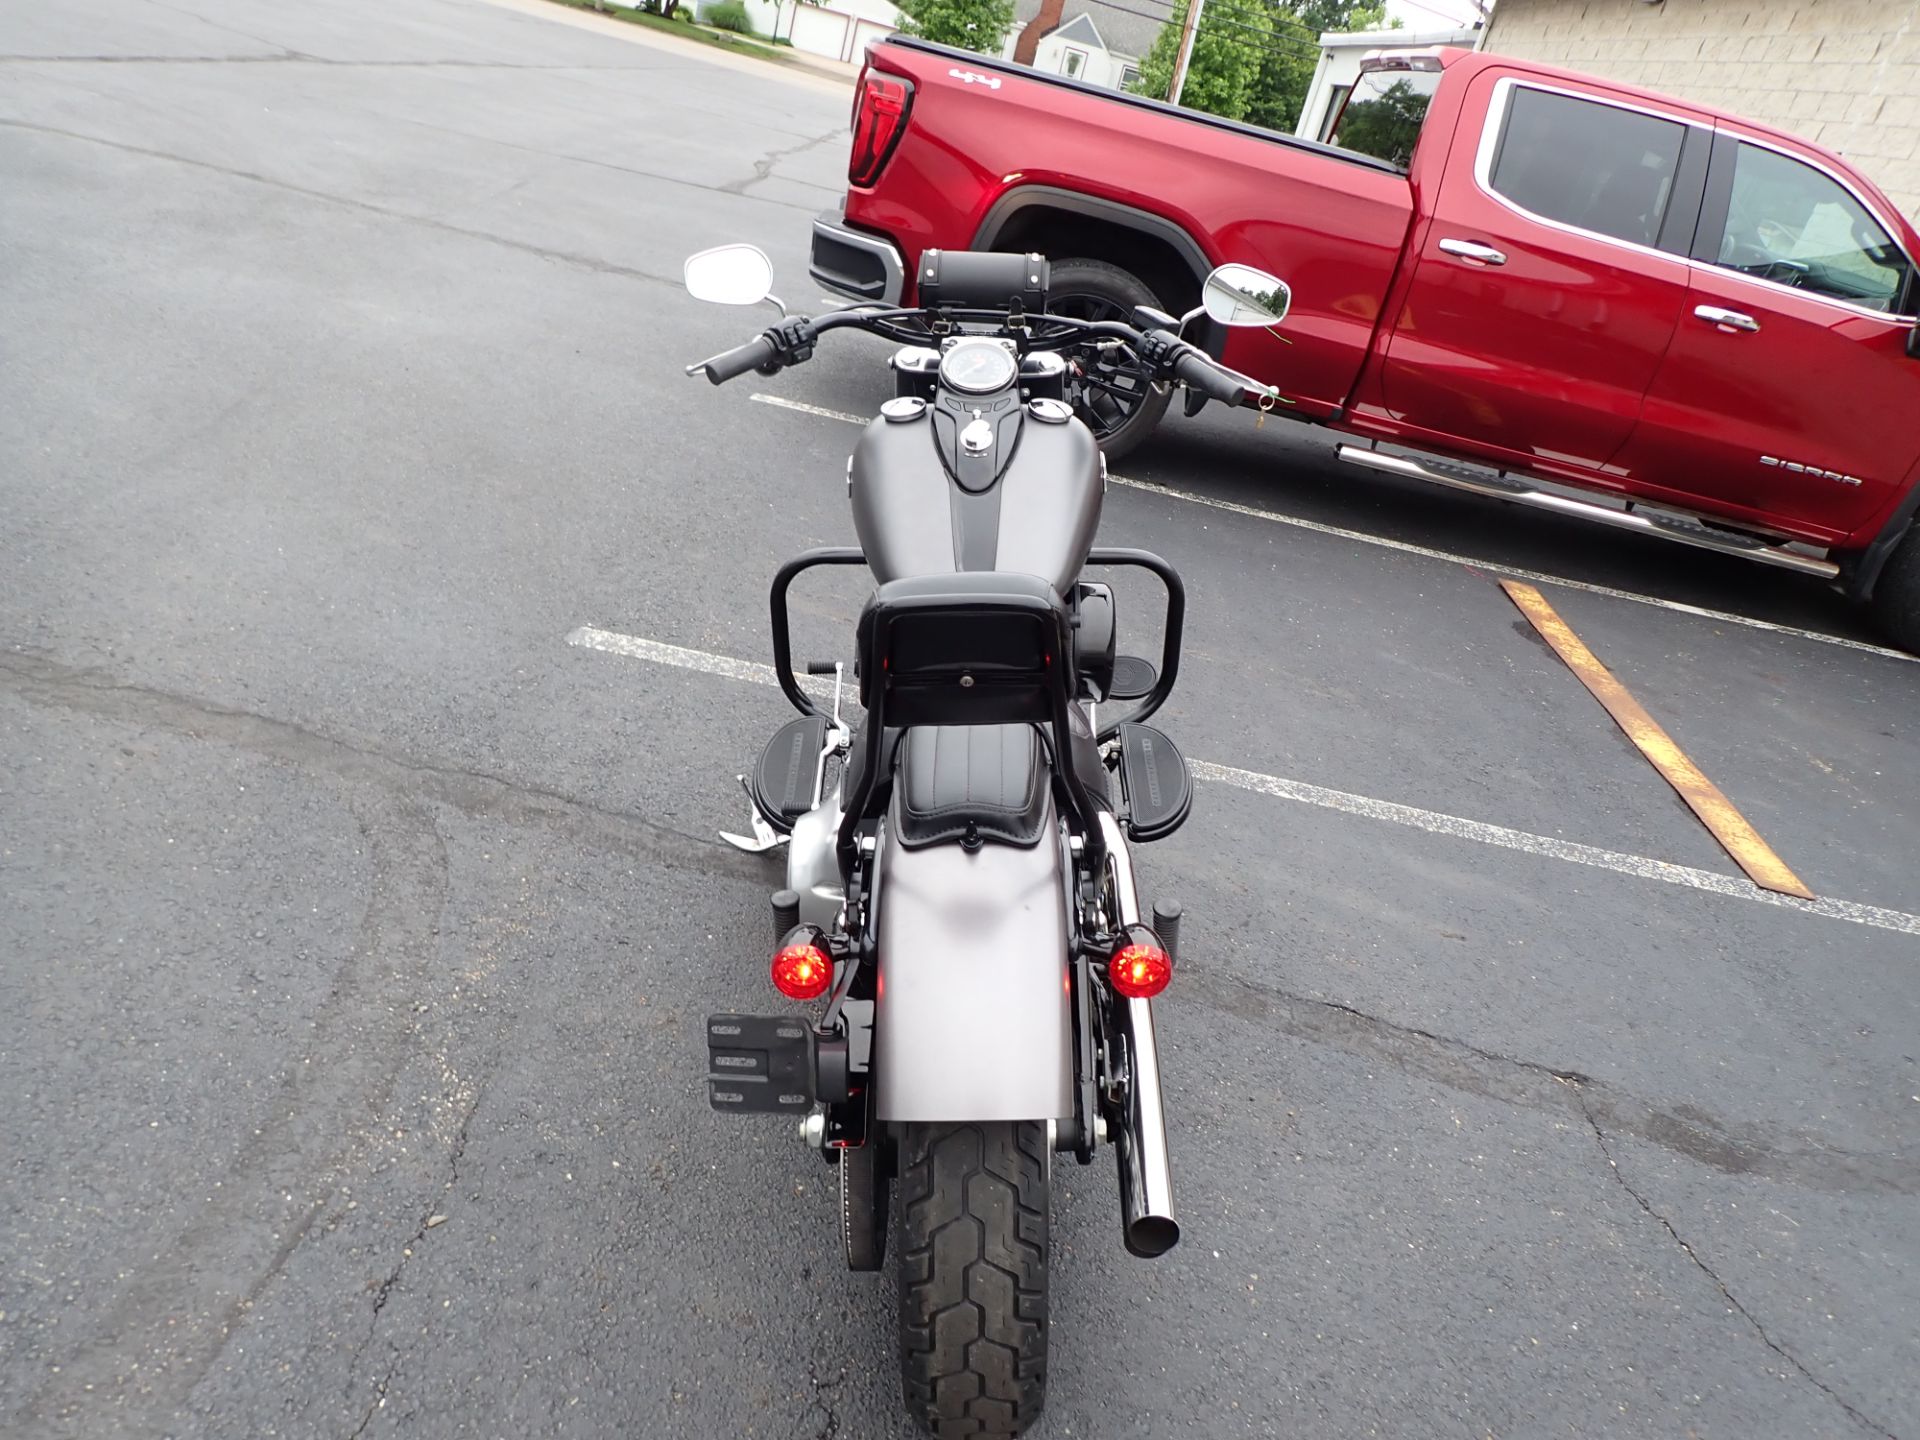 2015 Harley-Davidson Softail Slim® in Massillon, Ohio - Photo 16